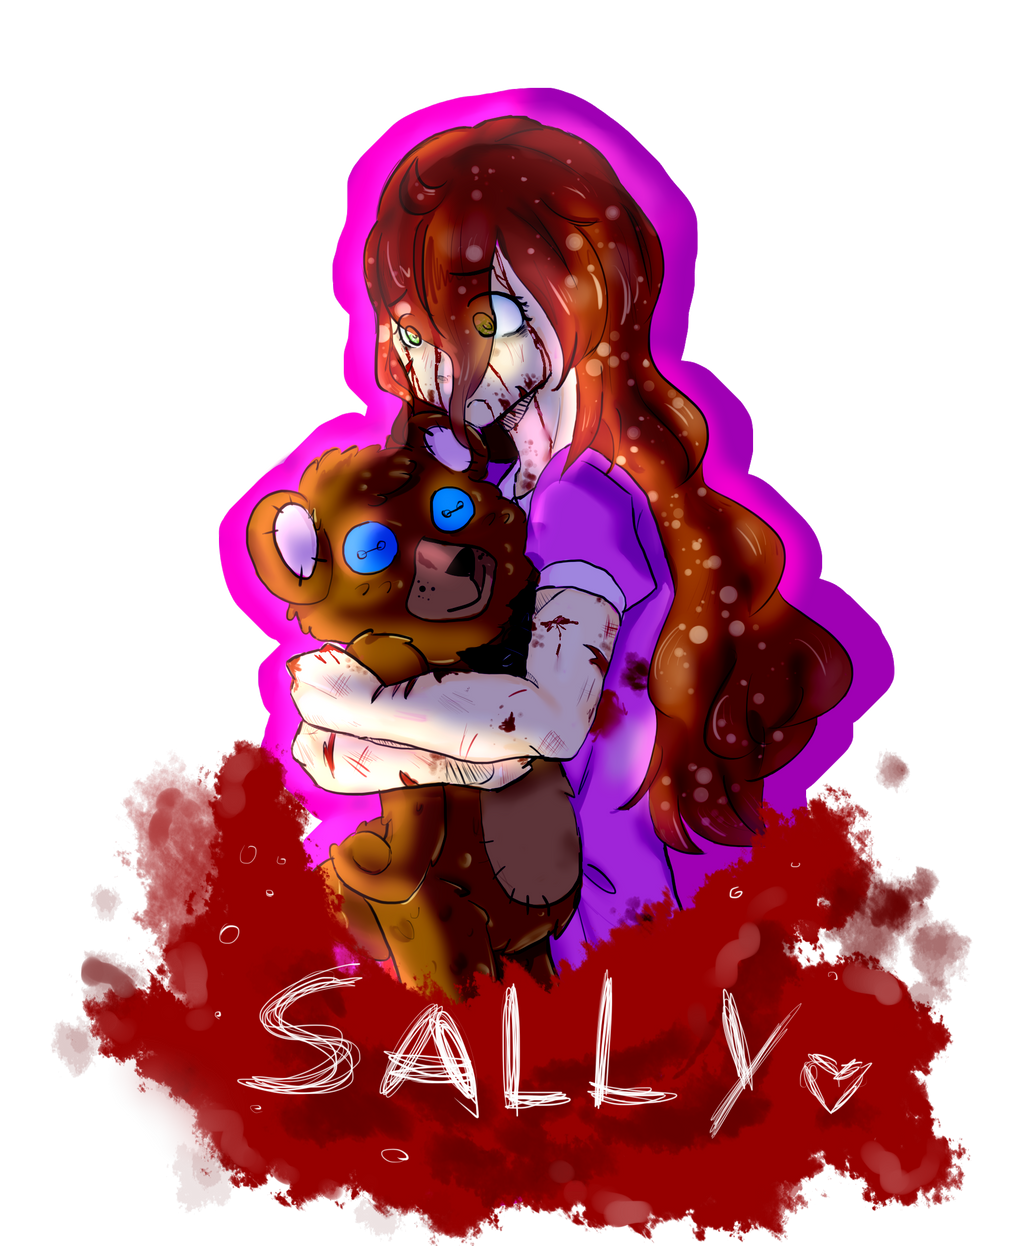 Sally Play With Me Creepypasta by ChrisOzFulton on DeviantArt